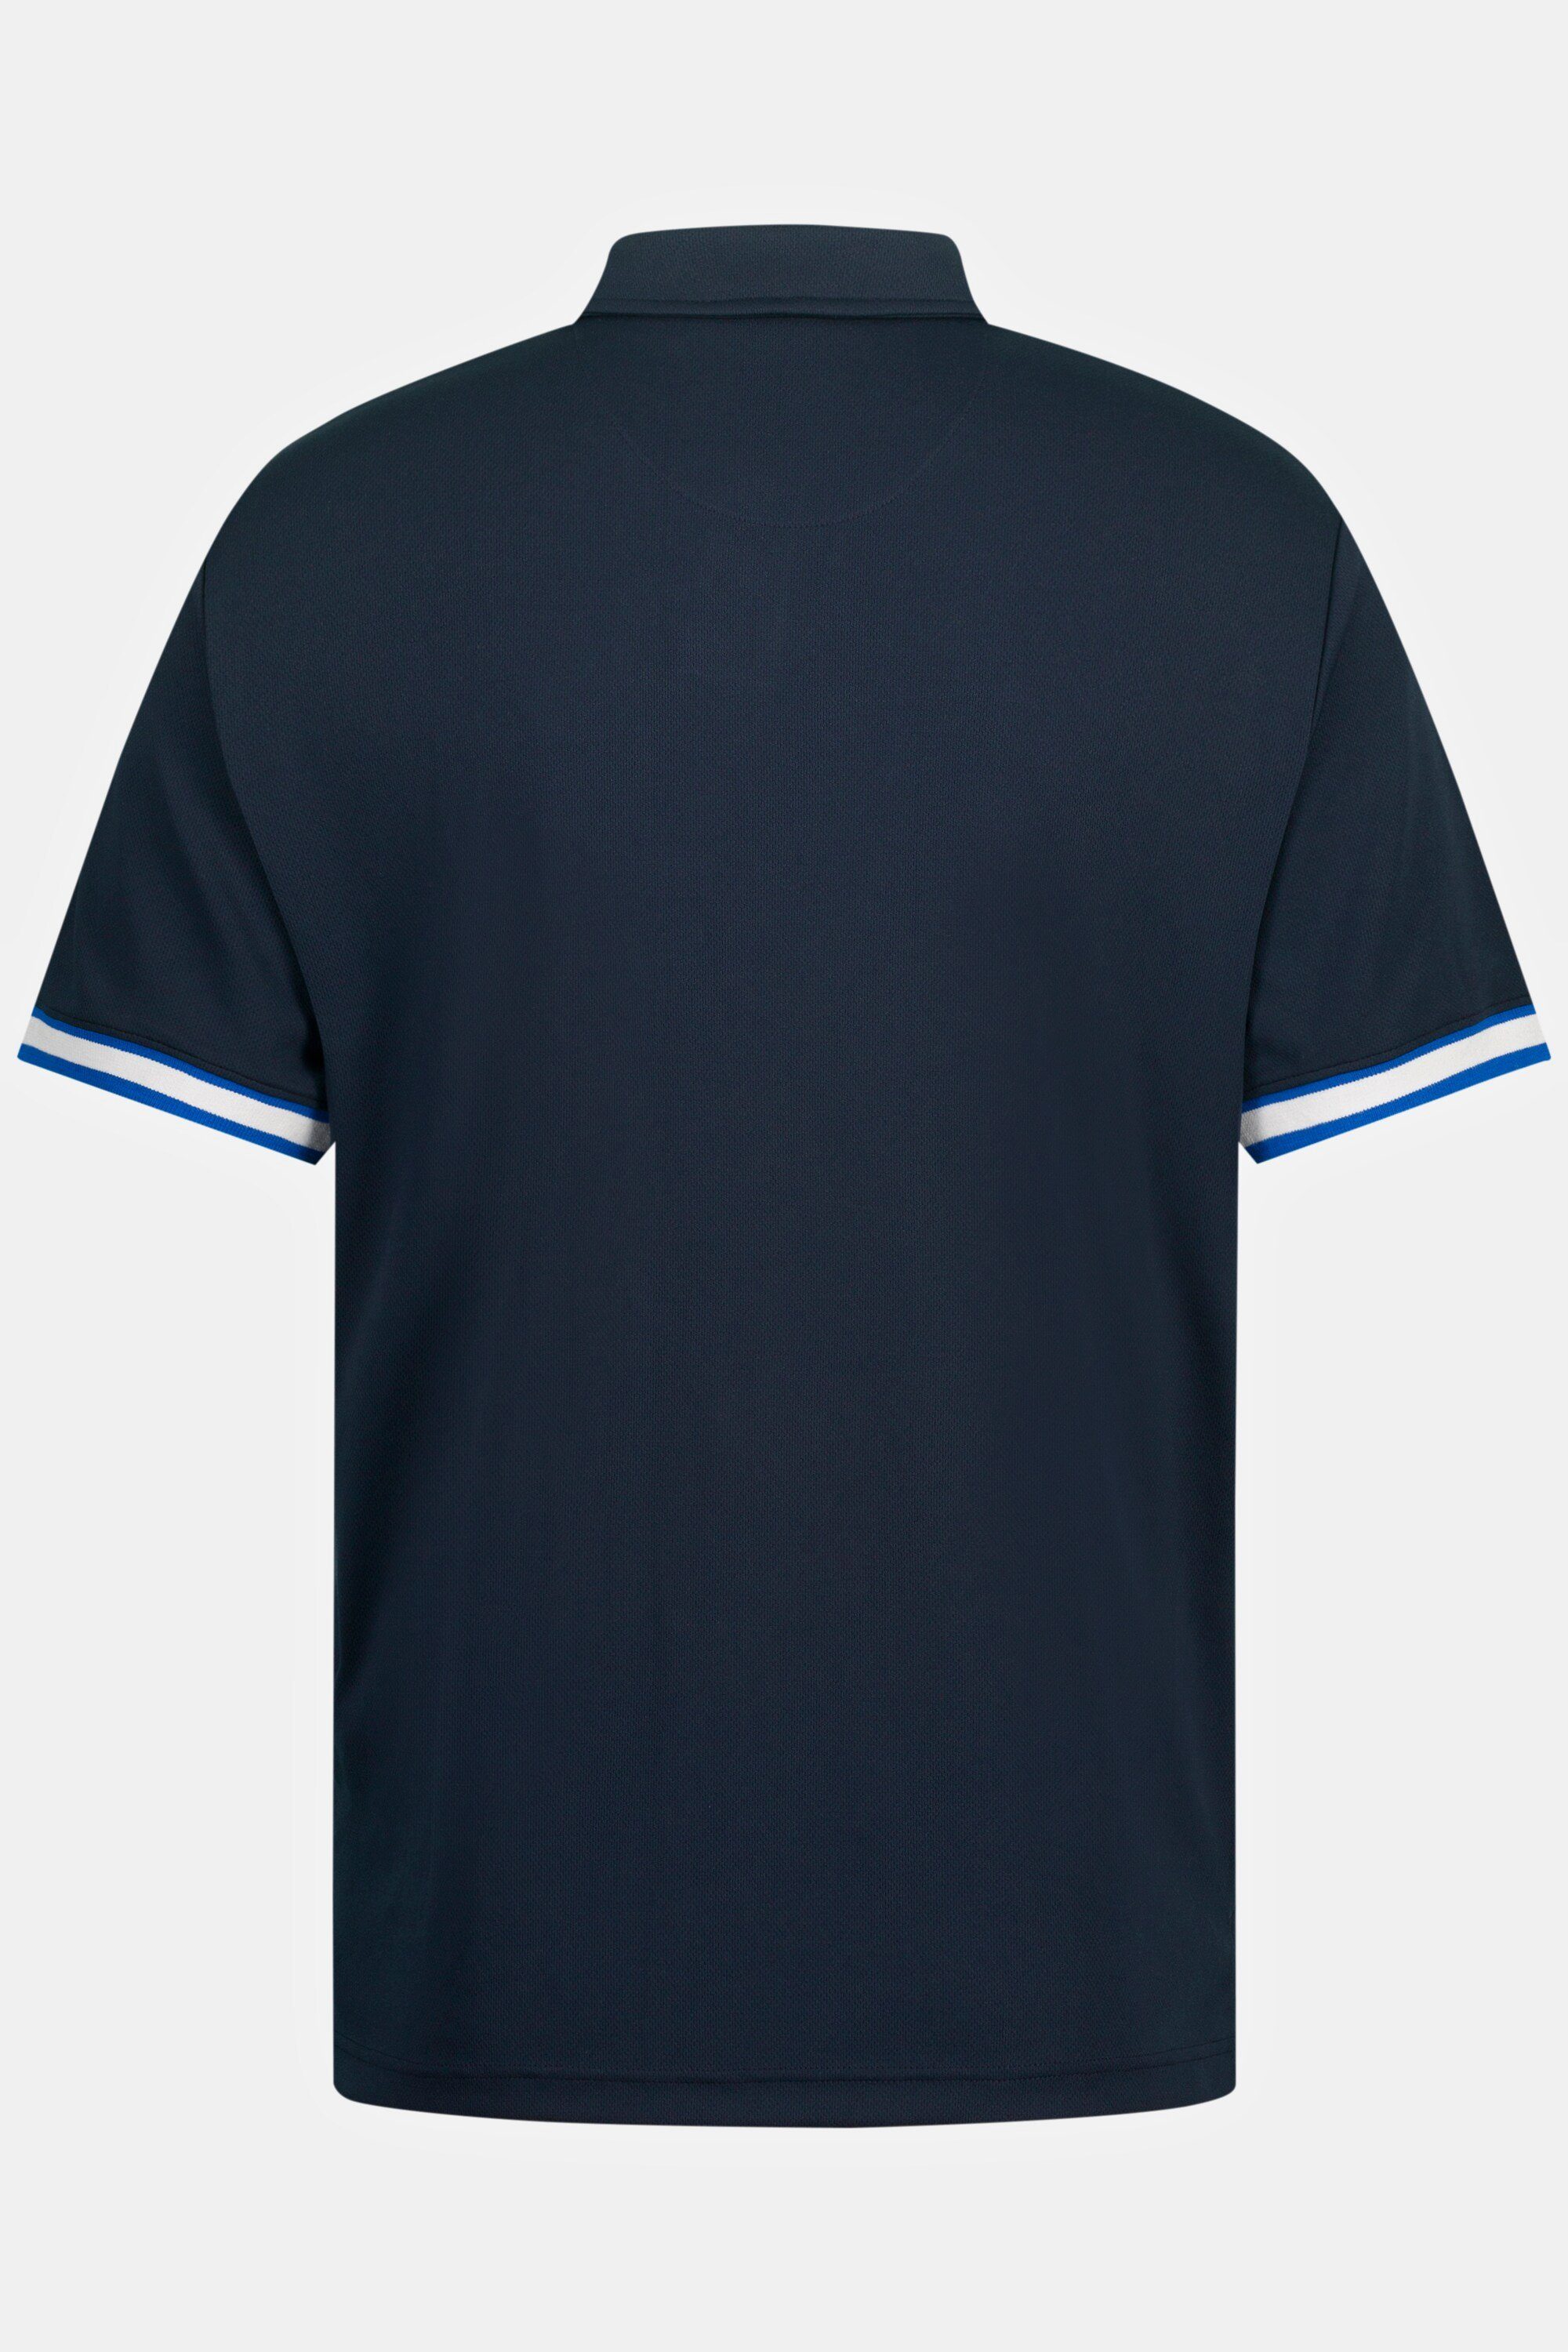 JP1880 Poloshirt Poloshirt FLEXNAMIC® Halbarm Tennis